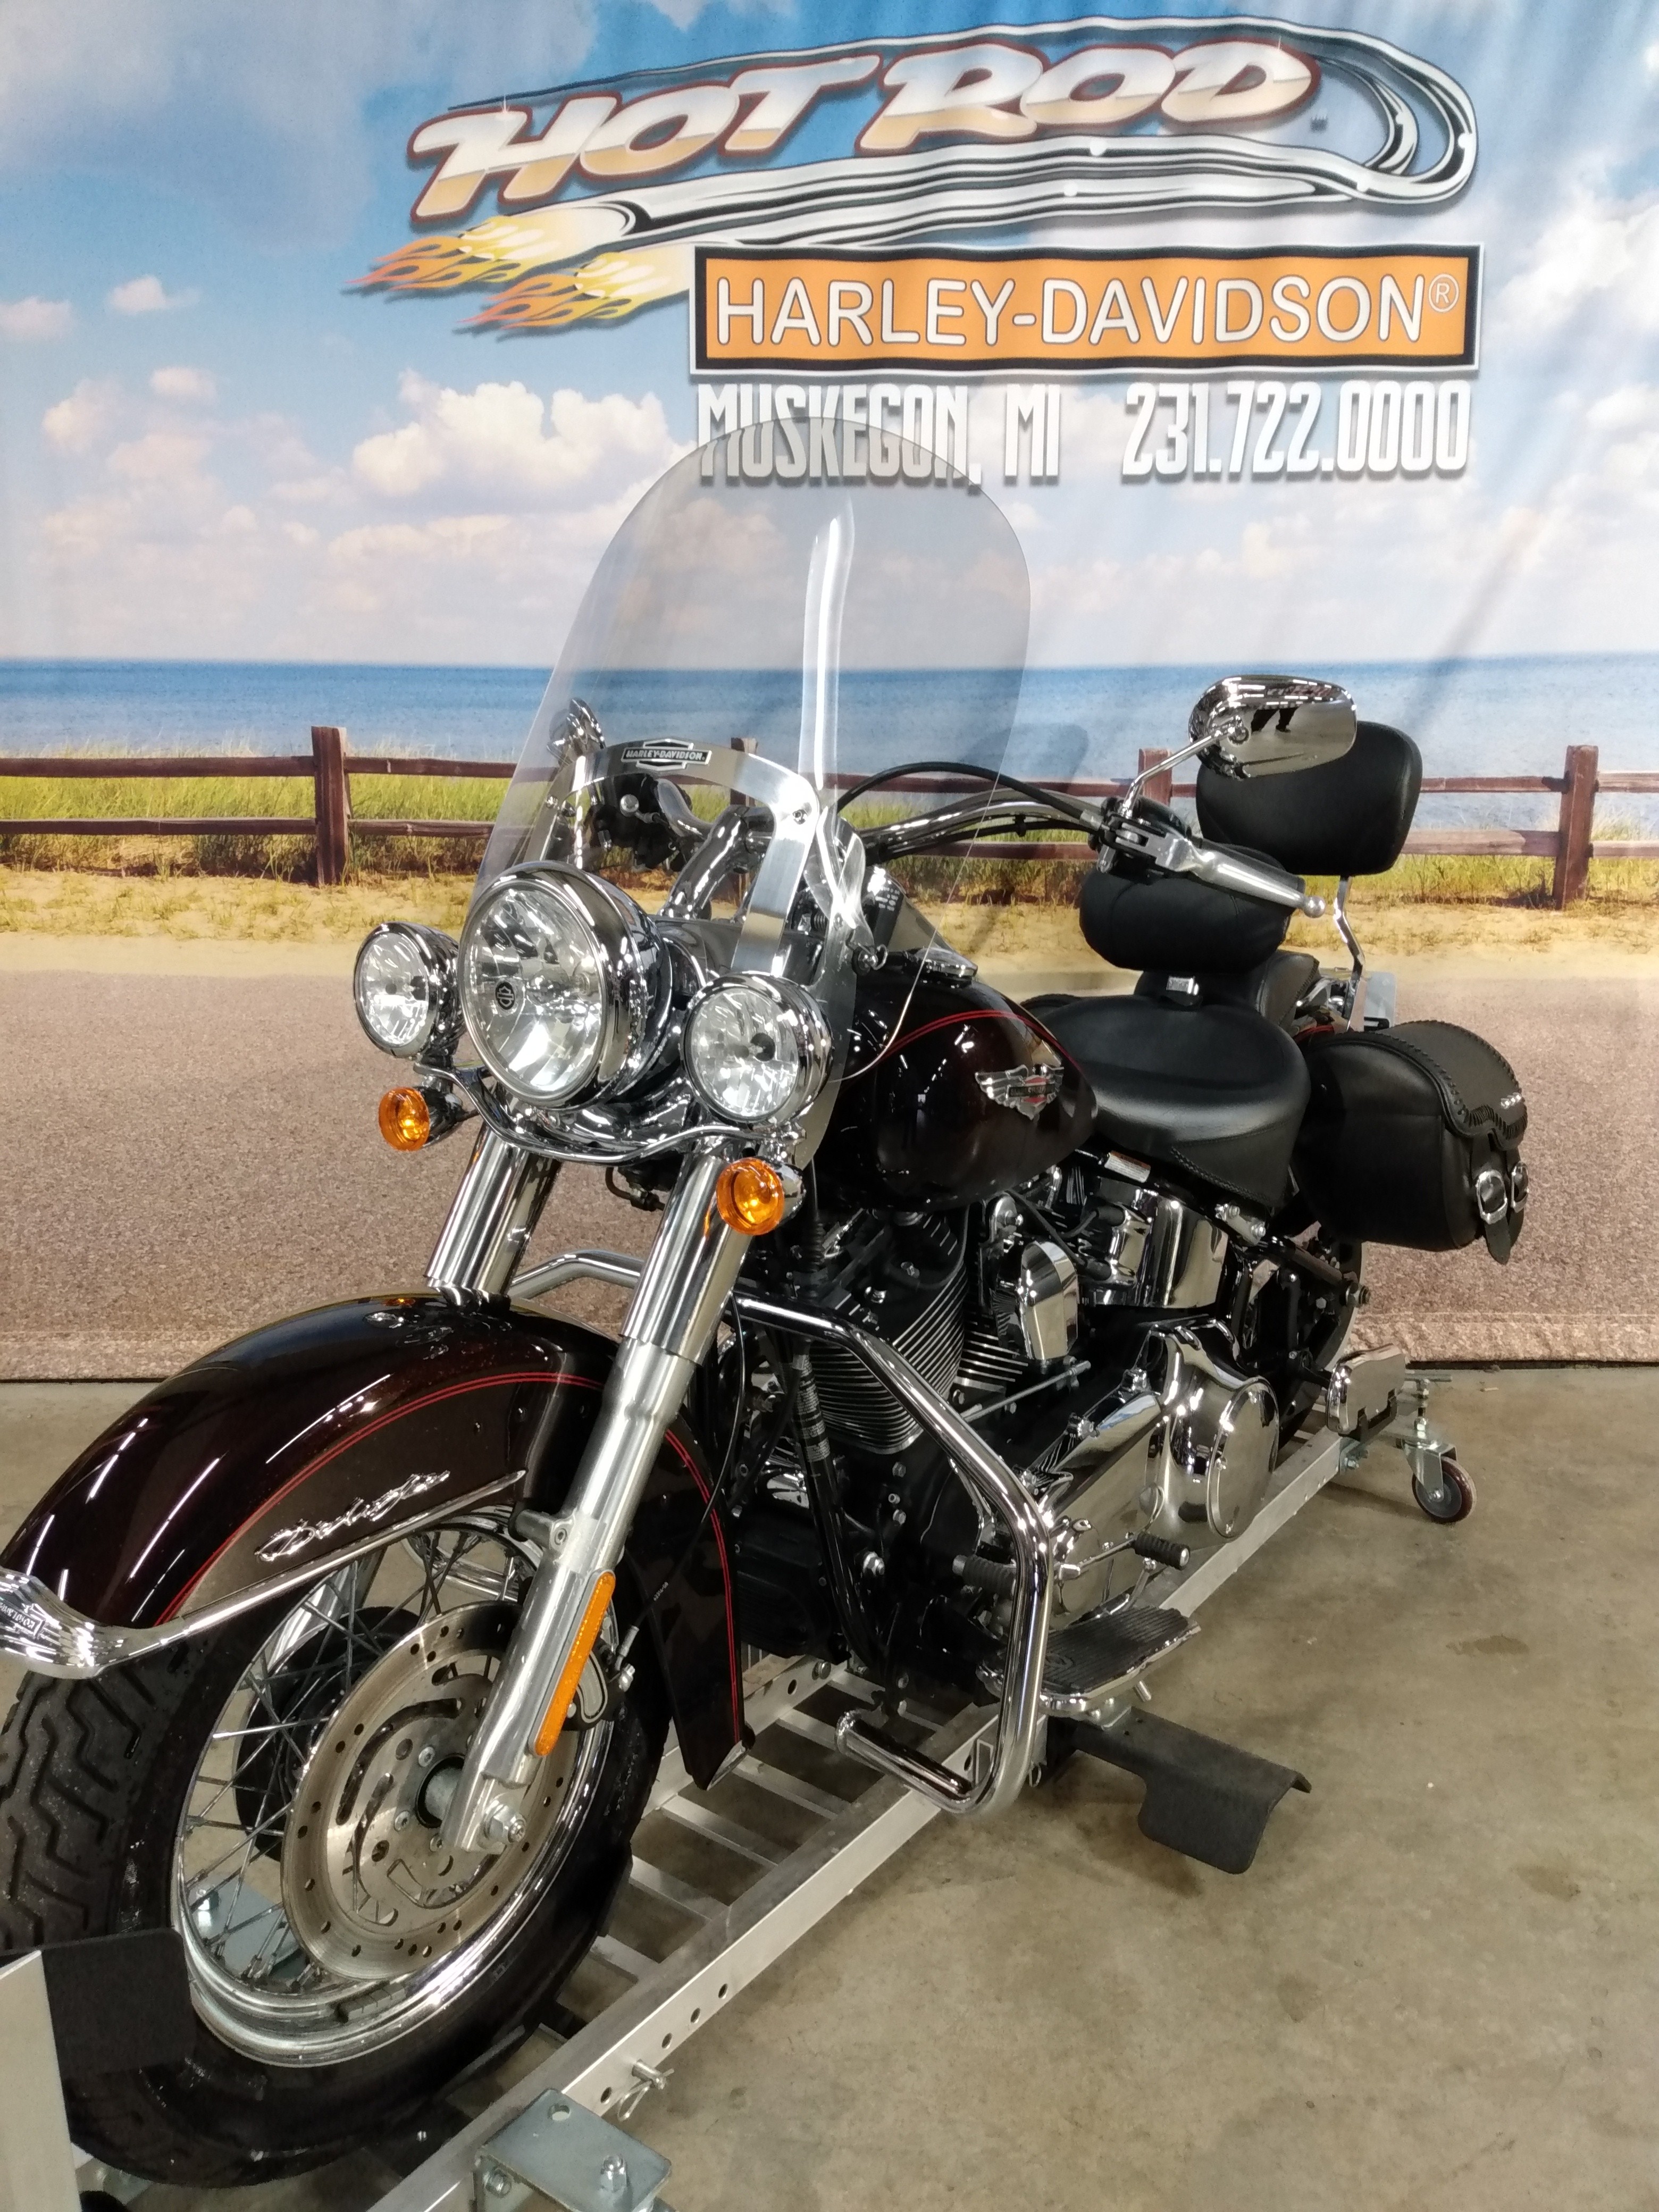 2011 Harley-Davidson Softail Deluxe at Hot Rod Harley-Davidson